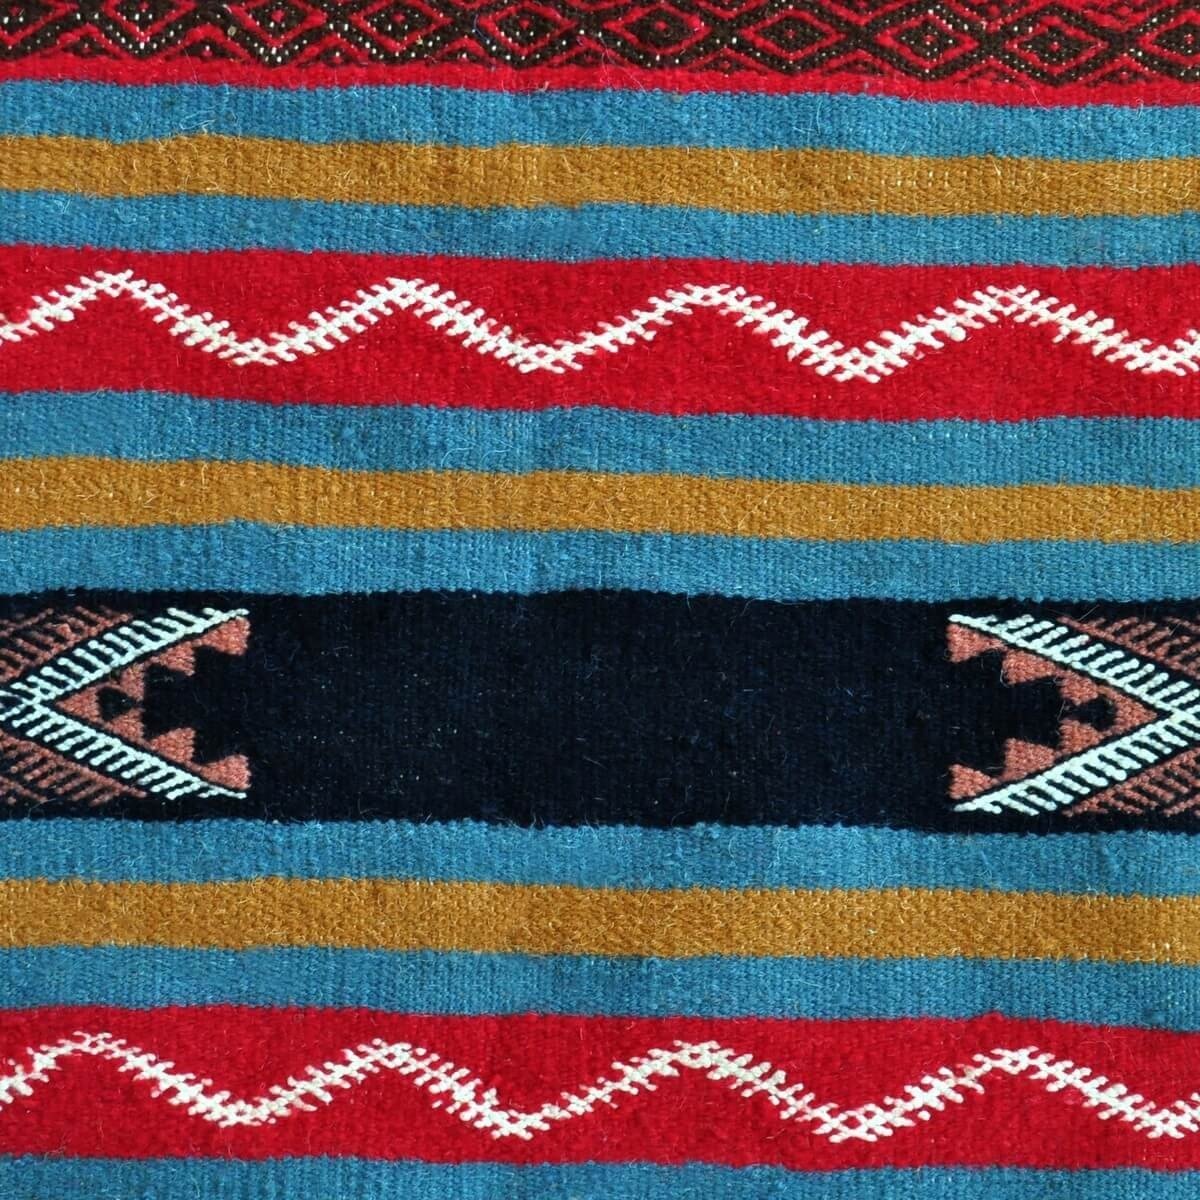 Berber tapijt Tapijt Kilim Halep 80x115 Blauw/Rood/Jeel (Handgeweven, Wol, Tunesië) Tunesisch kilimdeken, Marokkaanse stijl. Rec